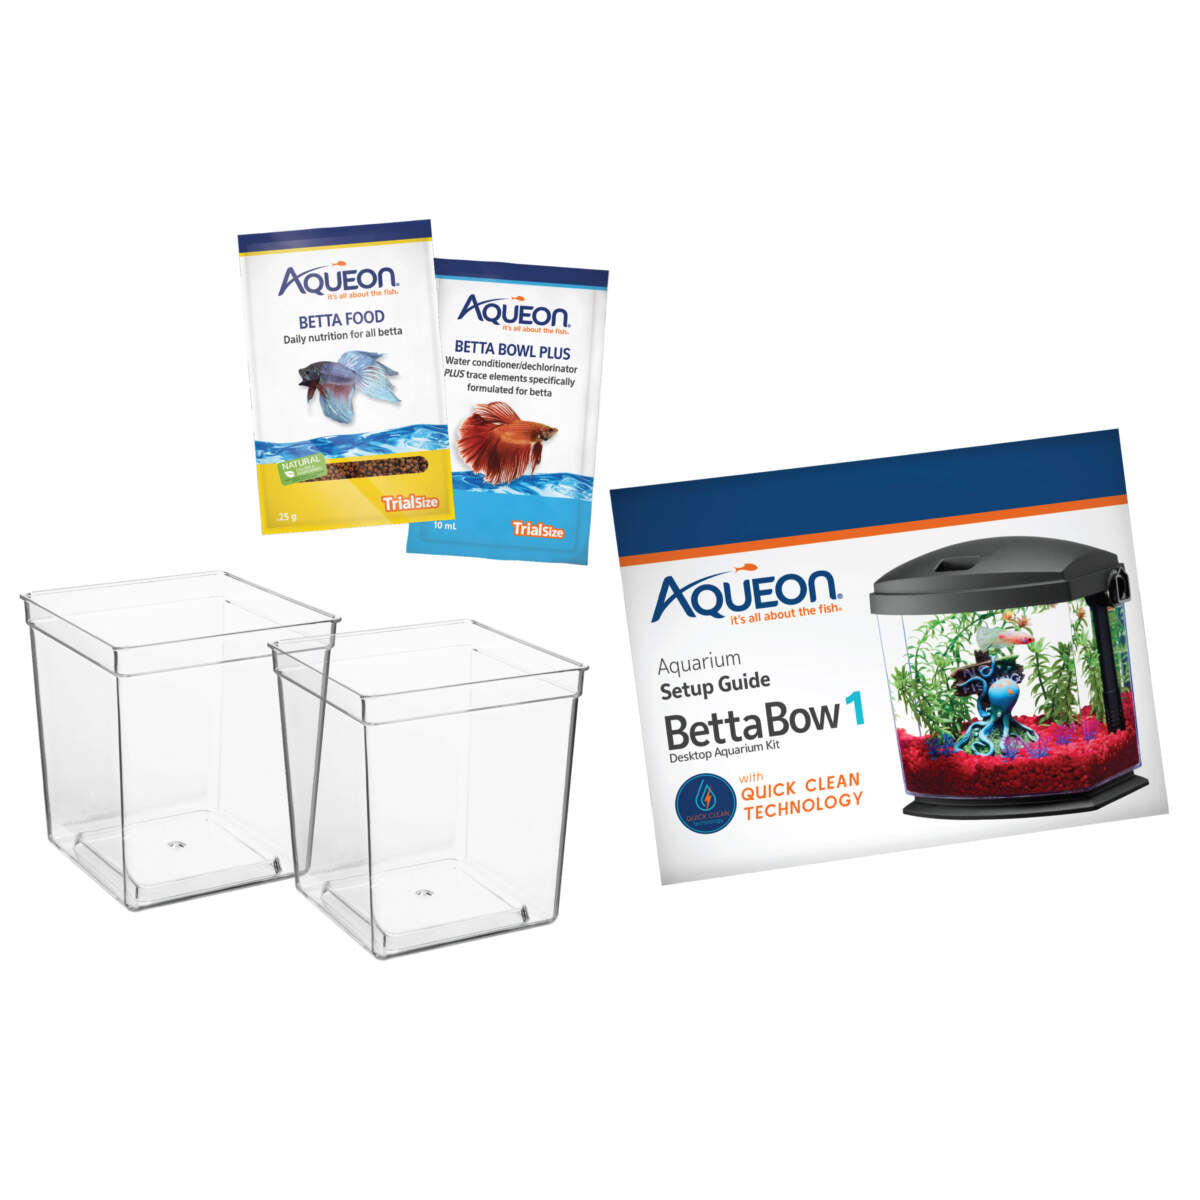 Aqueon BettaBow 1 Aquarium Kit with Quick Clean Technology